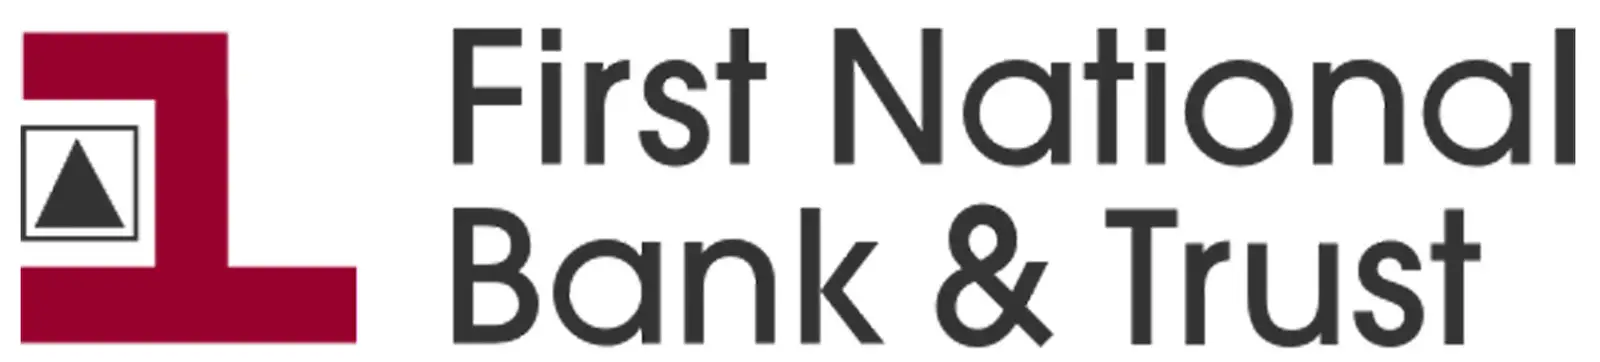 First National Bank & Trust  logo